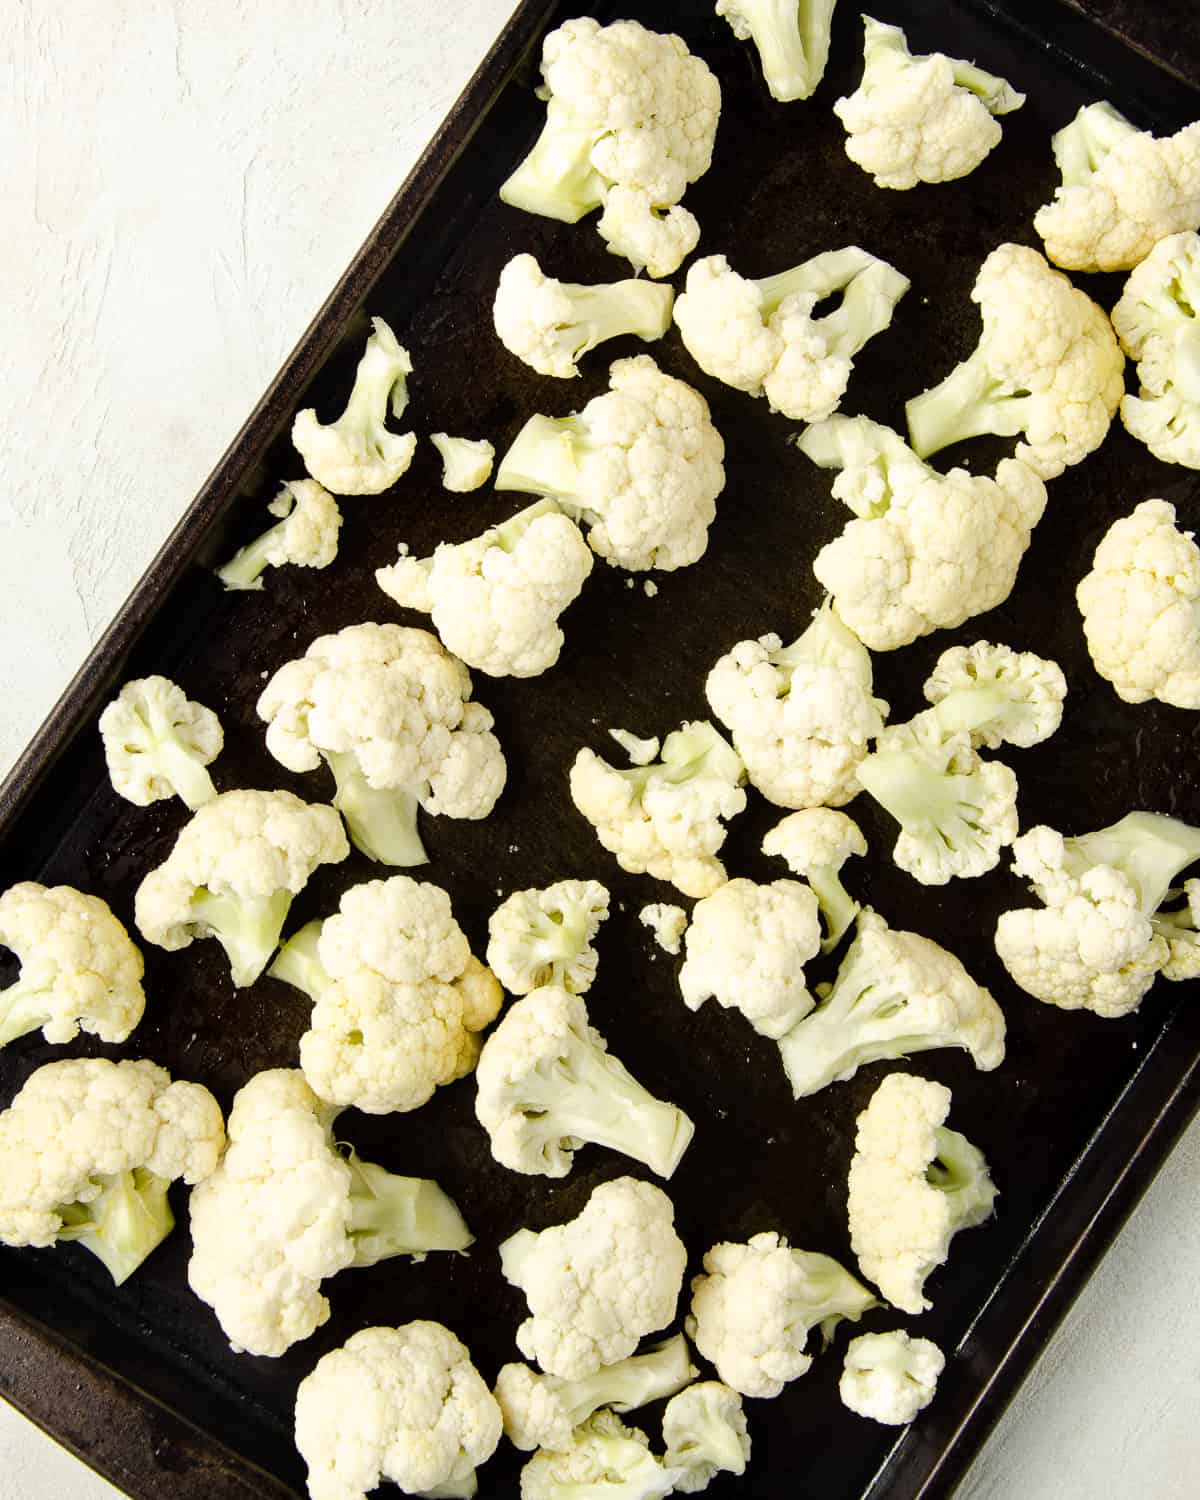 Cauliflower florets on a baking sheet ready to roast.